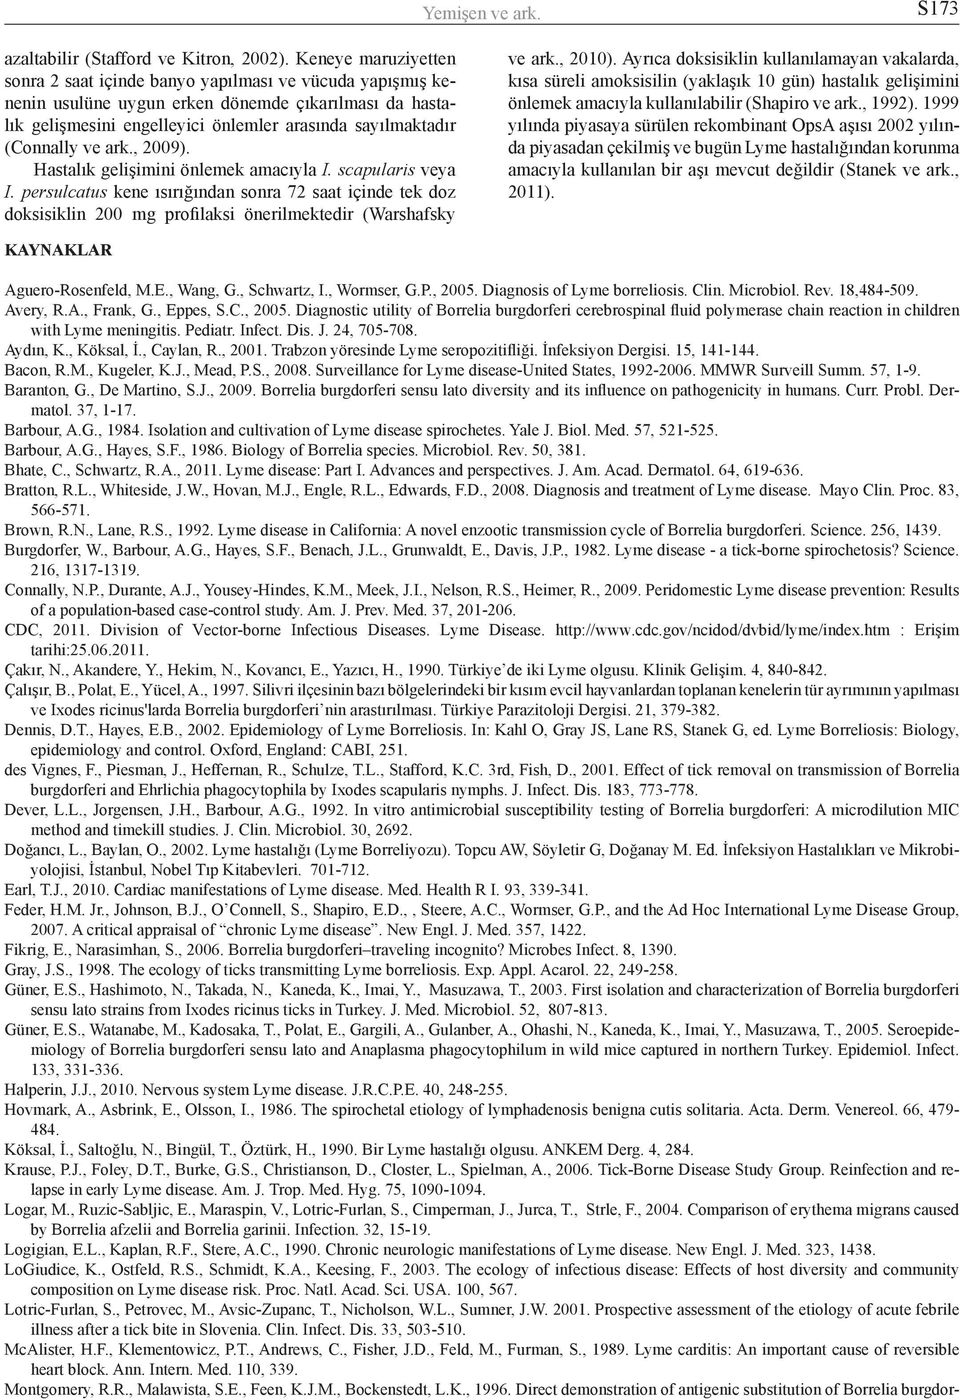 Diagnostic utility of Borrelia burgdorferi cerebrospinal fluid polymerase chain reaction in children with Lyme meningitis. Pediatr. Infect. Dis. J. 24, 705-708. Aydın, K., Köksal, İ., Caylan, R.